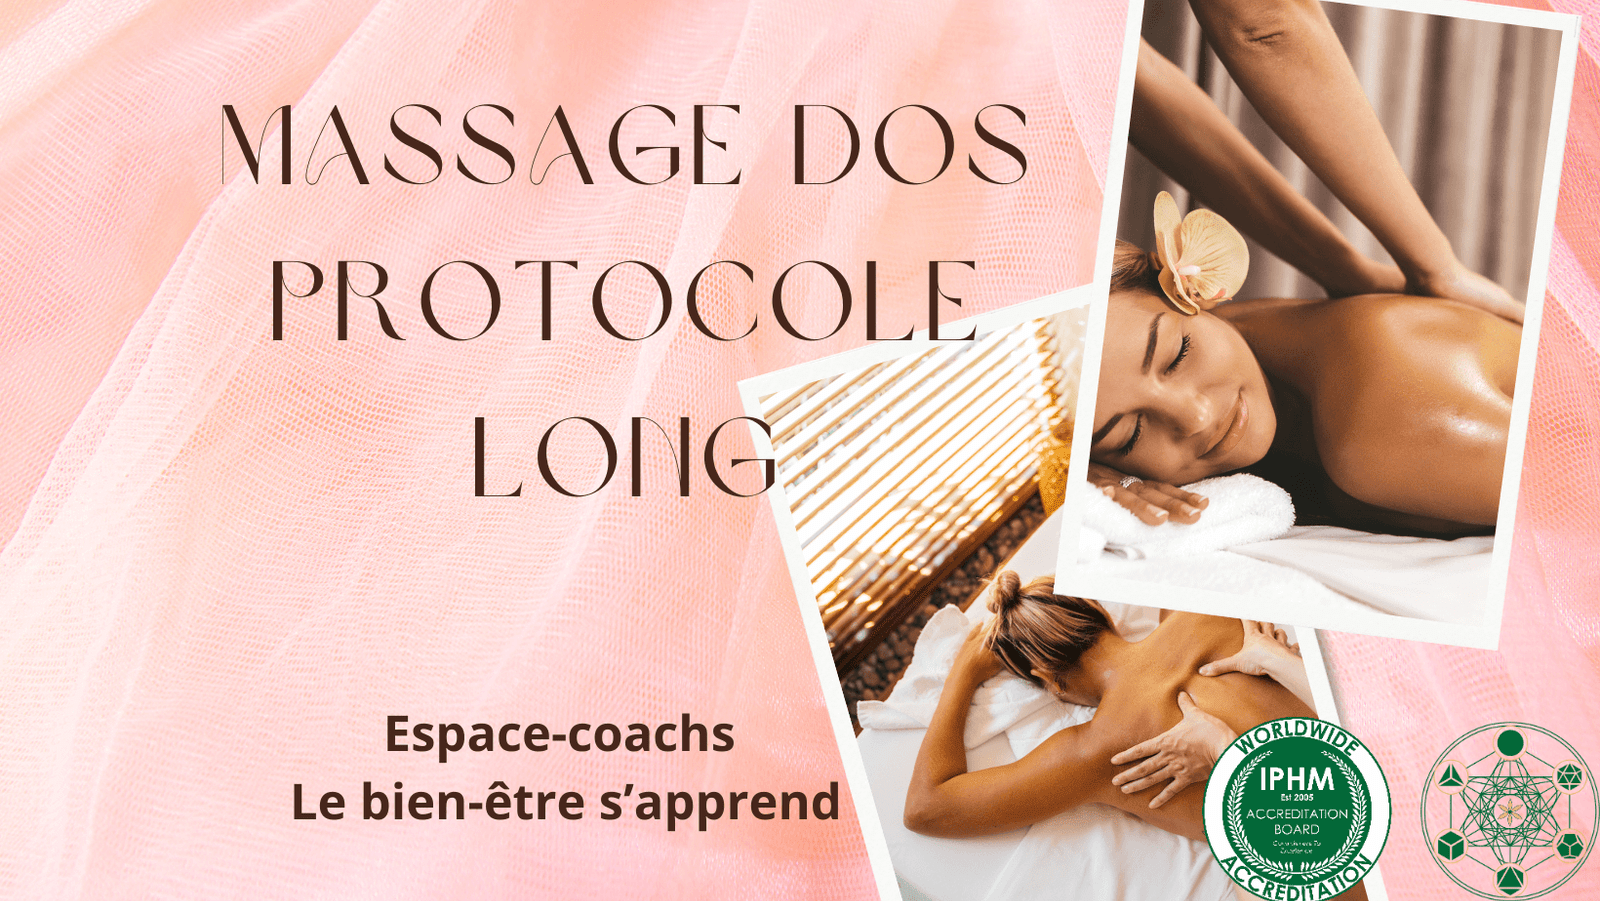 Massage dos - protocole long : formation certifiante 10/12/23